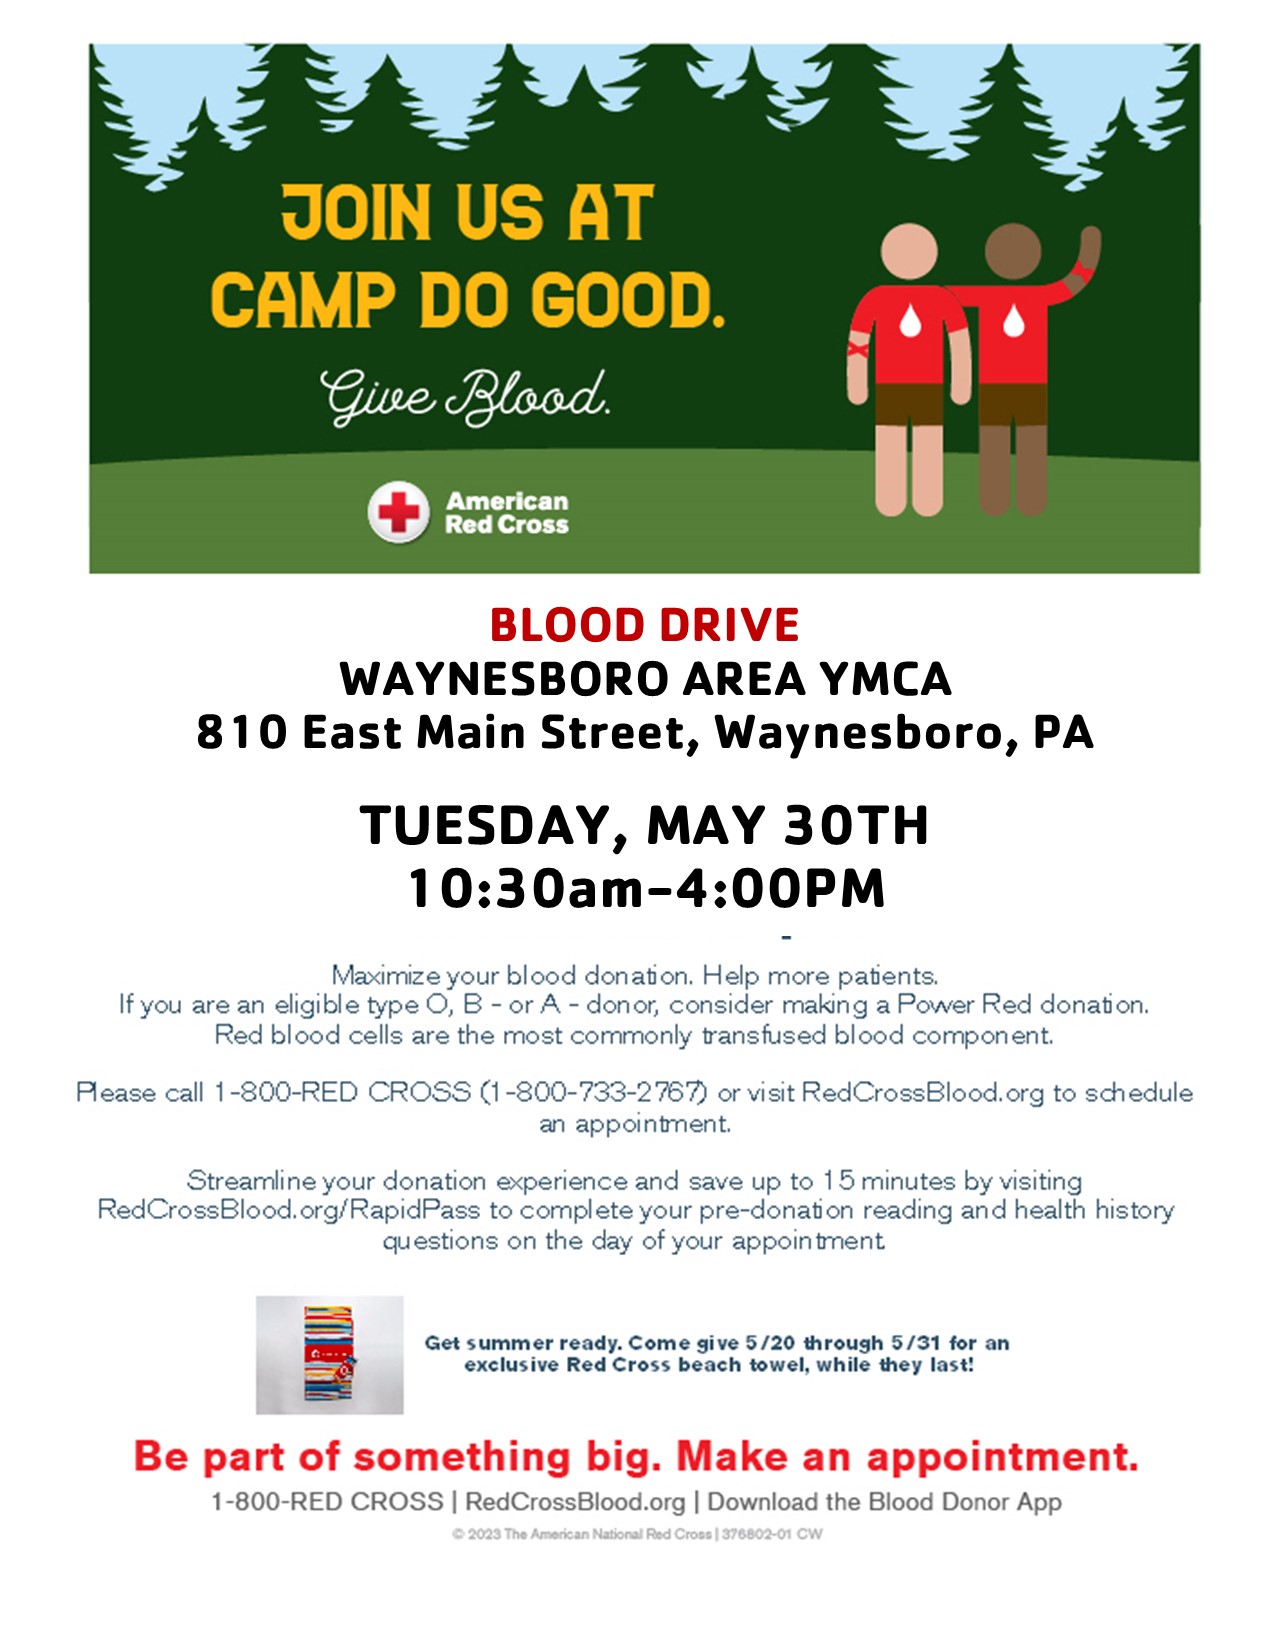 rim marmorering aborre Blood Drive with the American Red Cross – Waynesboro YMCA